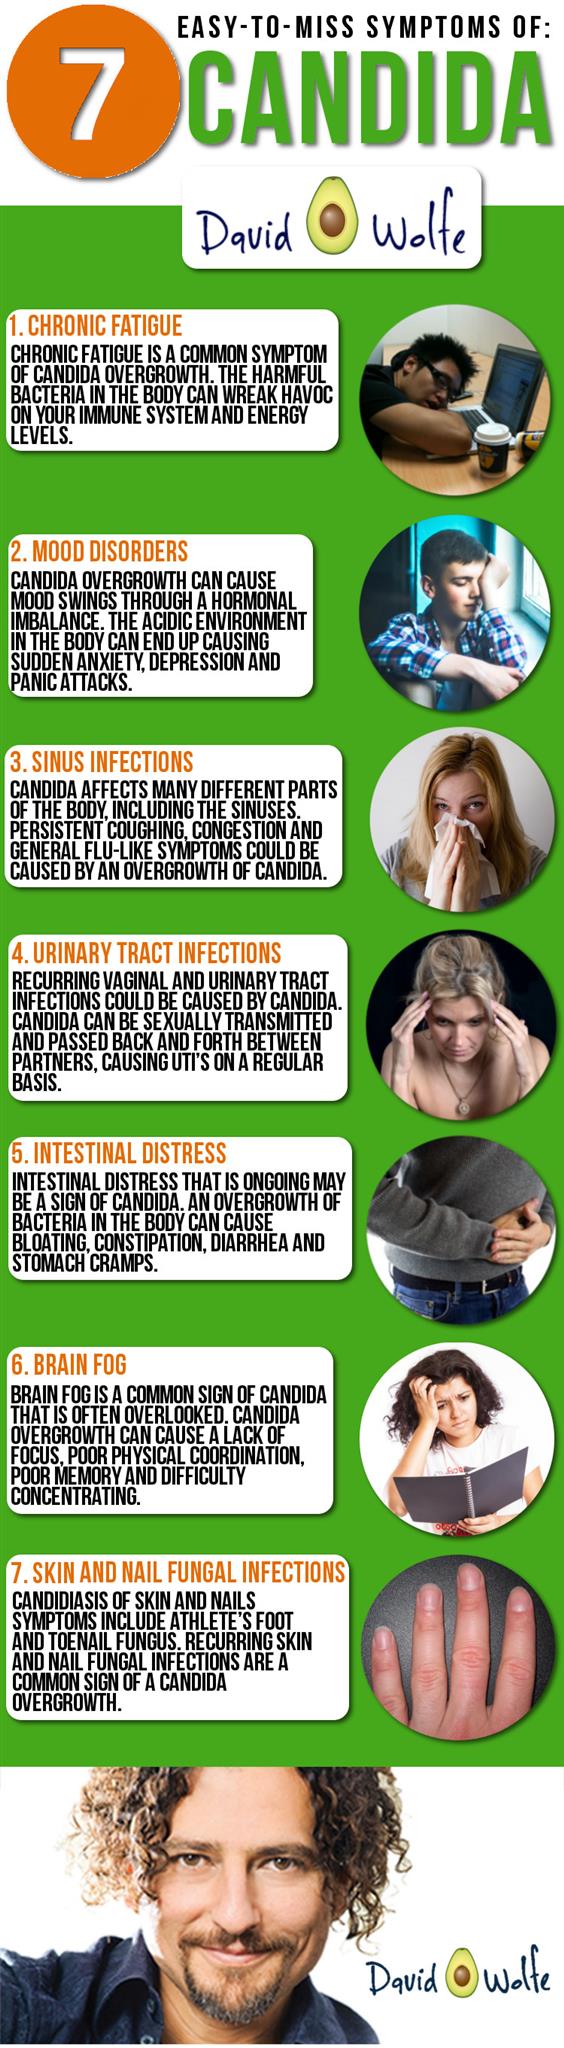 7 candida symptoms